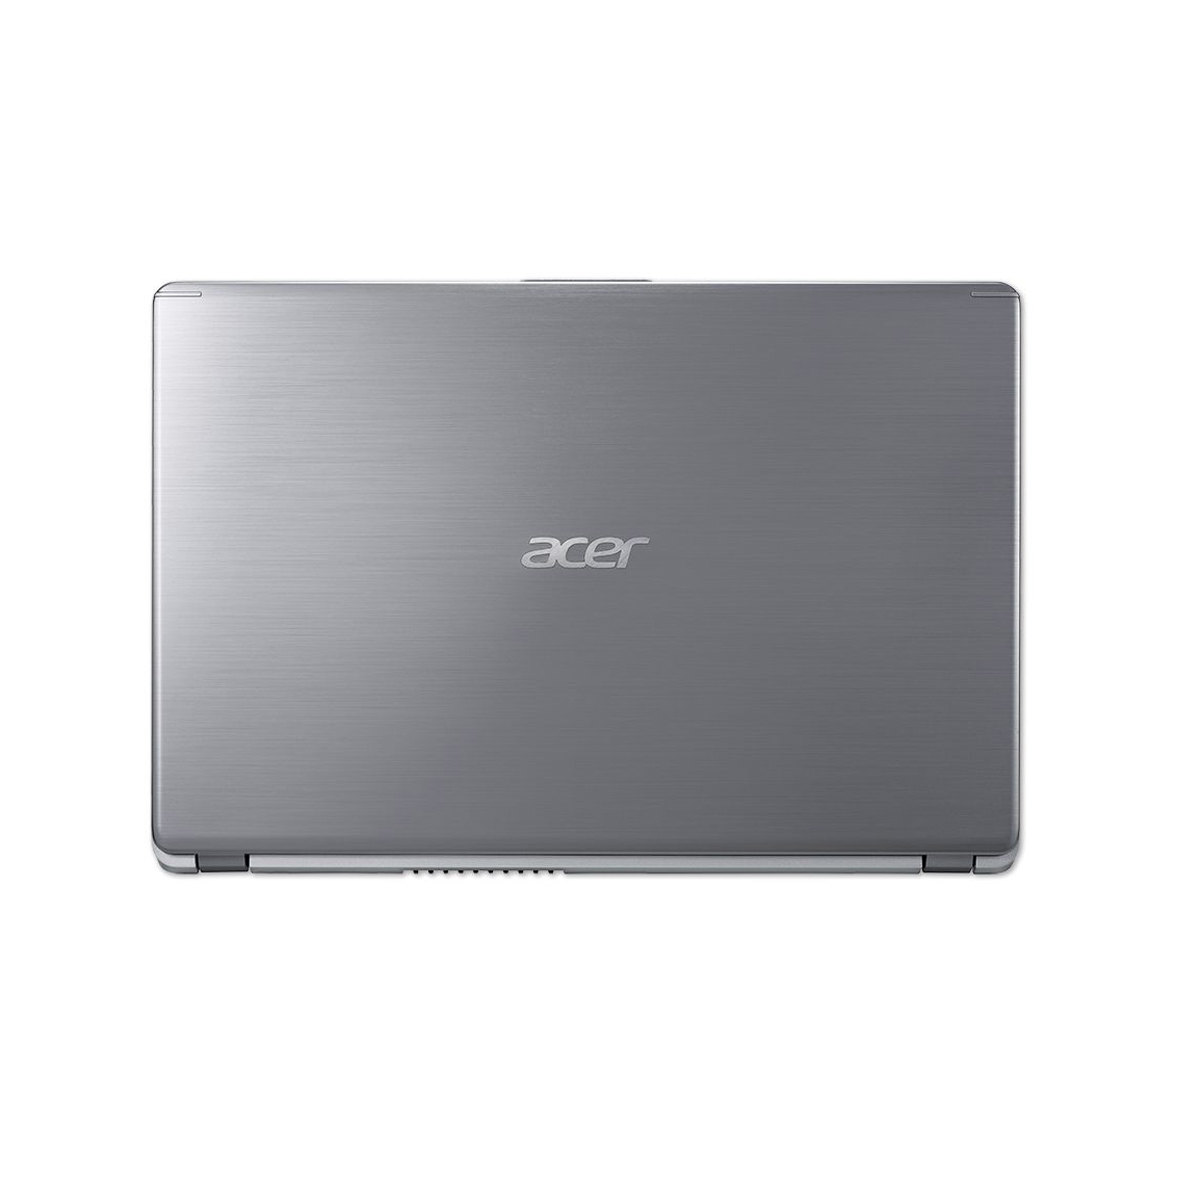 Notebook Acer A515 Core I5 8265u Memoria 4gb Ddr4 Hd 1tb Ssd 120gb Tela 15.6' Led Hd Sistema Windows 10 Home